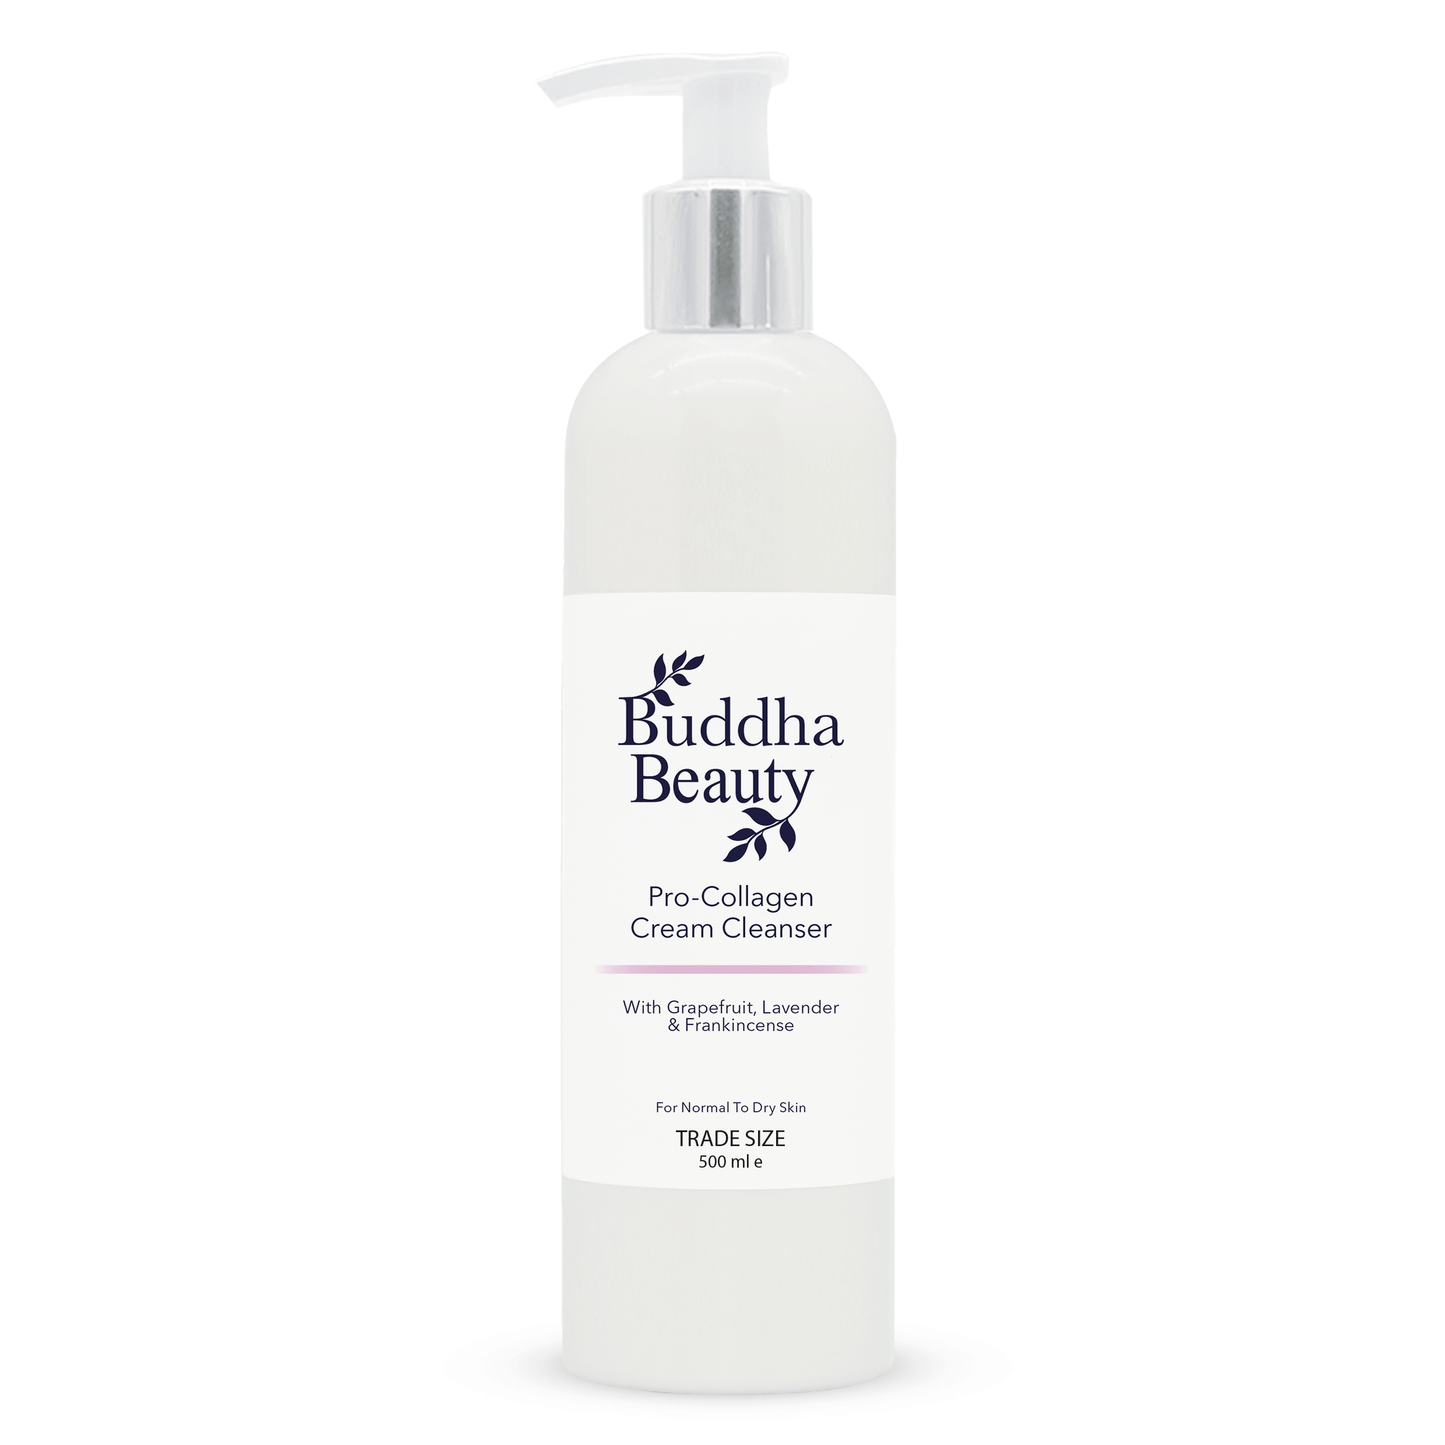 Pro-Collagen Cream Cleanser | Buddha Beauty Trade